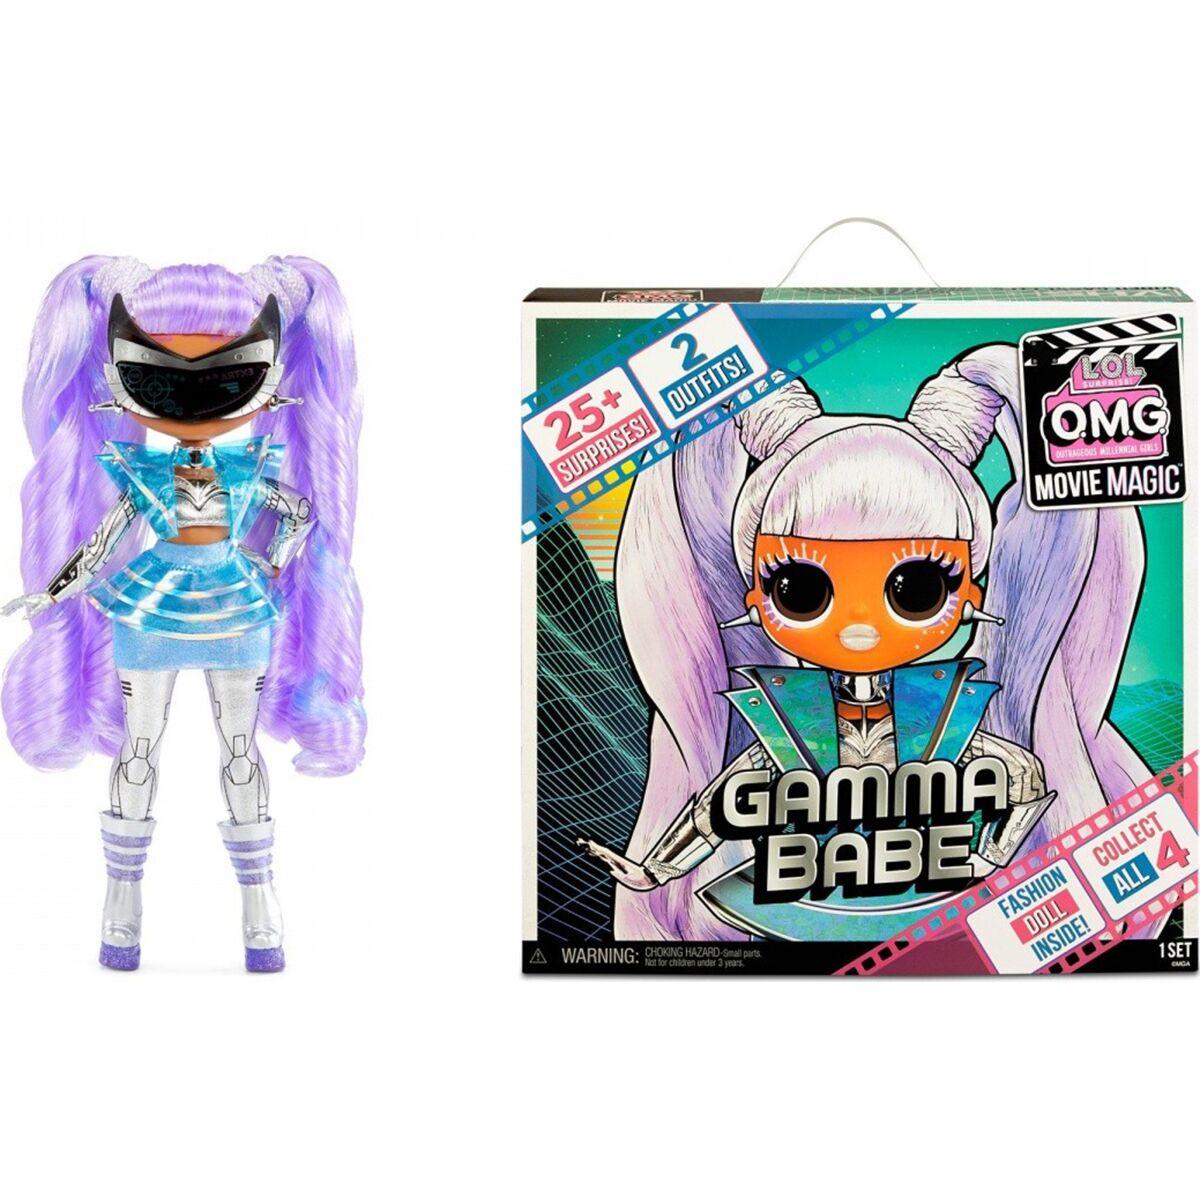 L.O.L.: Surprise Кукла OMG Movie Magic Doll- Gamma Babe